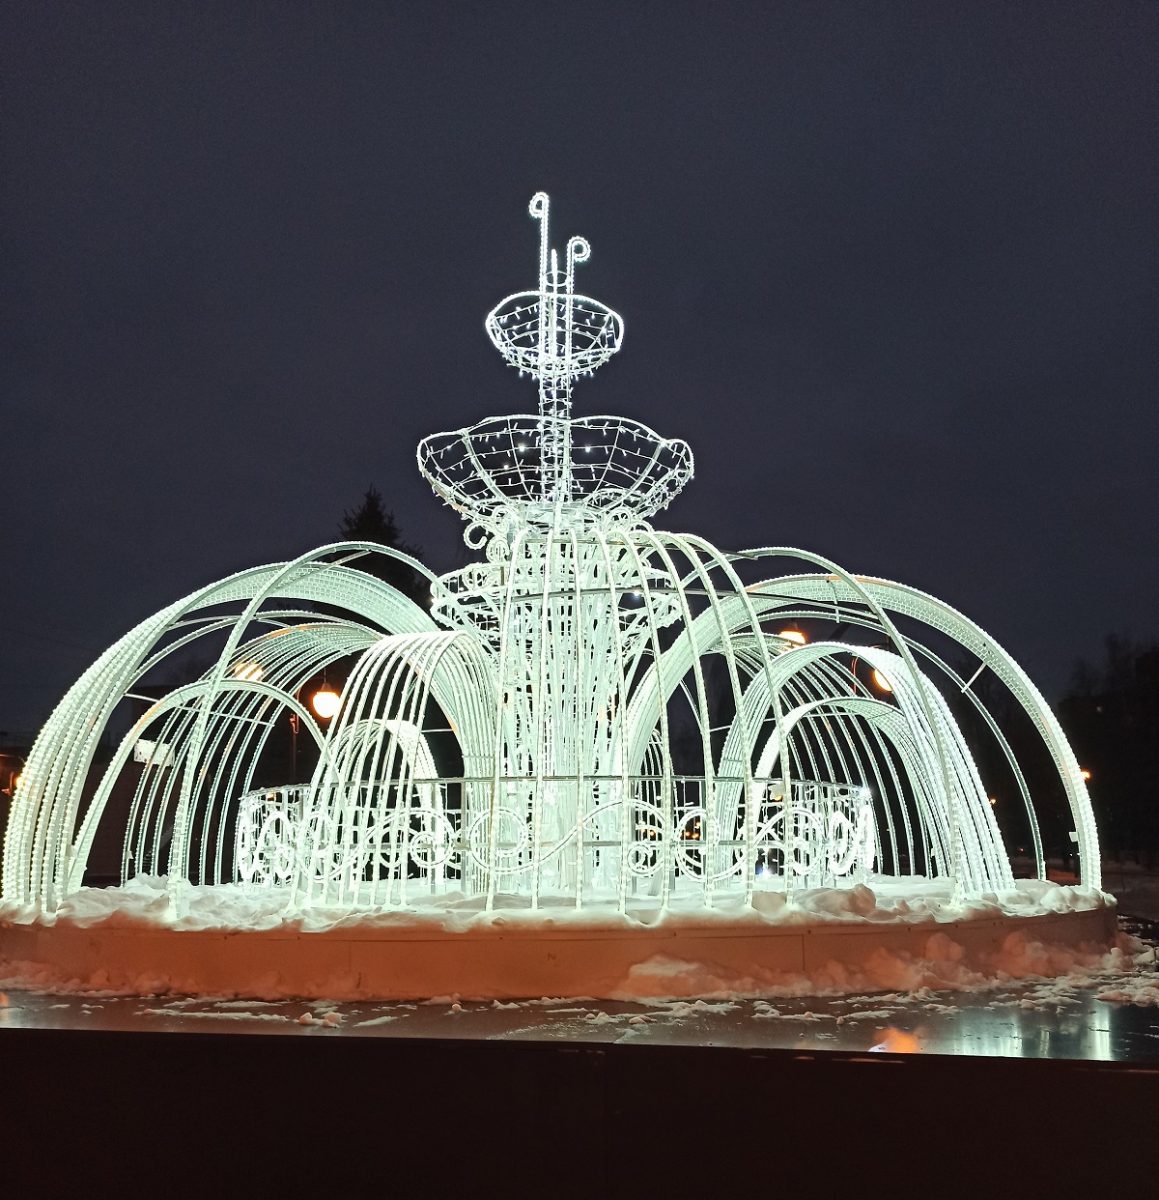 Зимний фонтан появился в Кстове в канун новогодних праздников